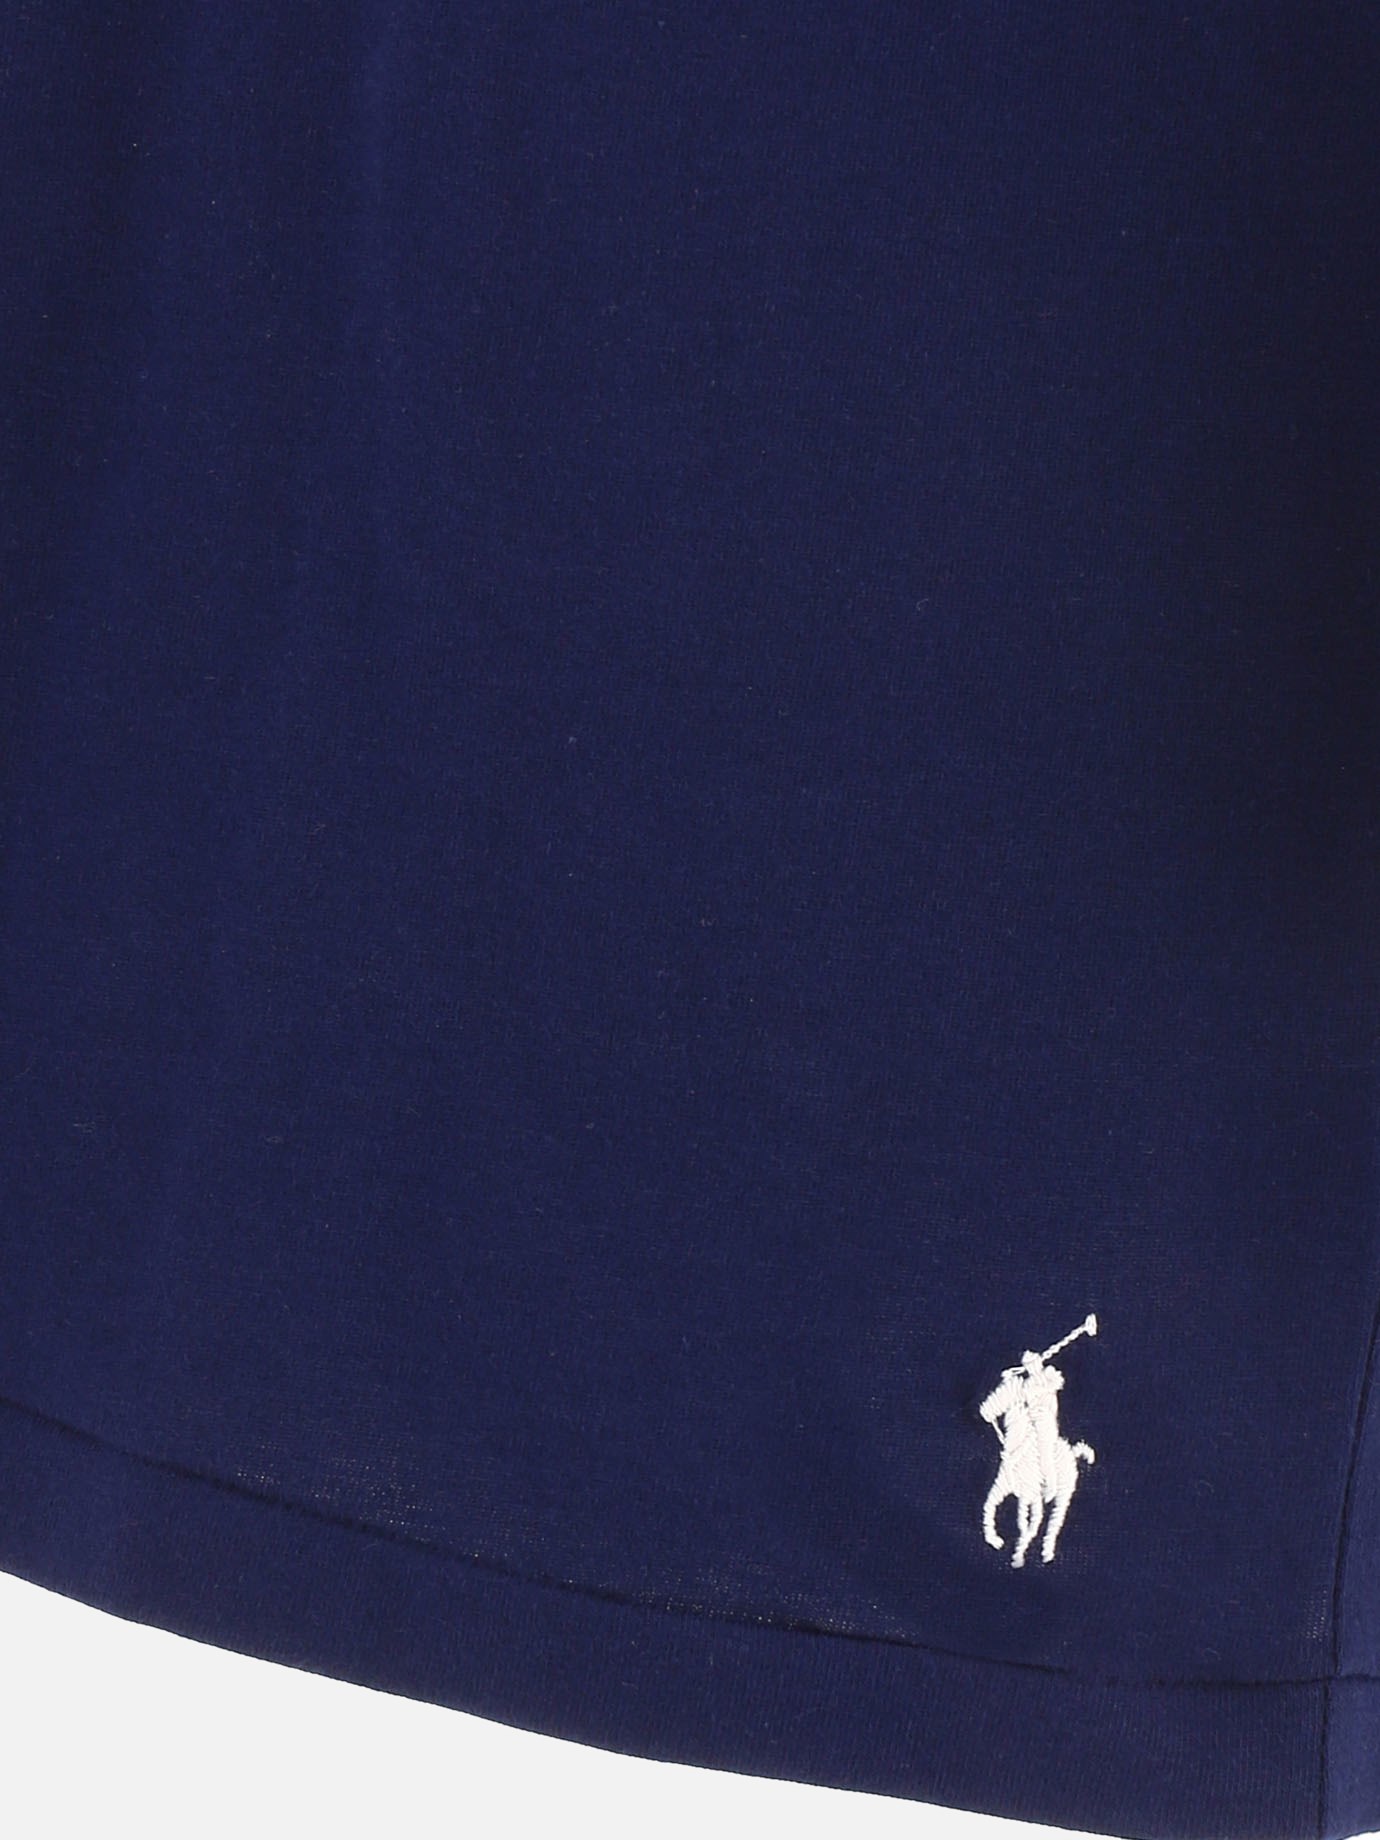 T-shirt  Polo  by Polo Ralph Lauren